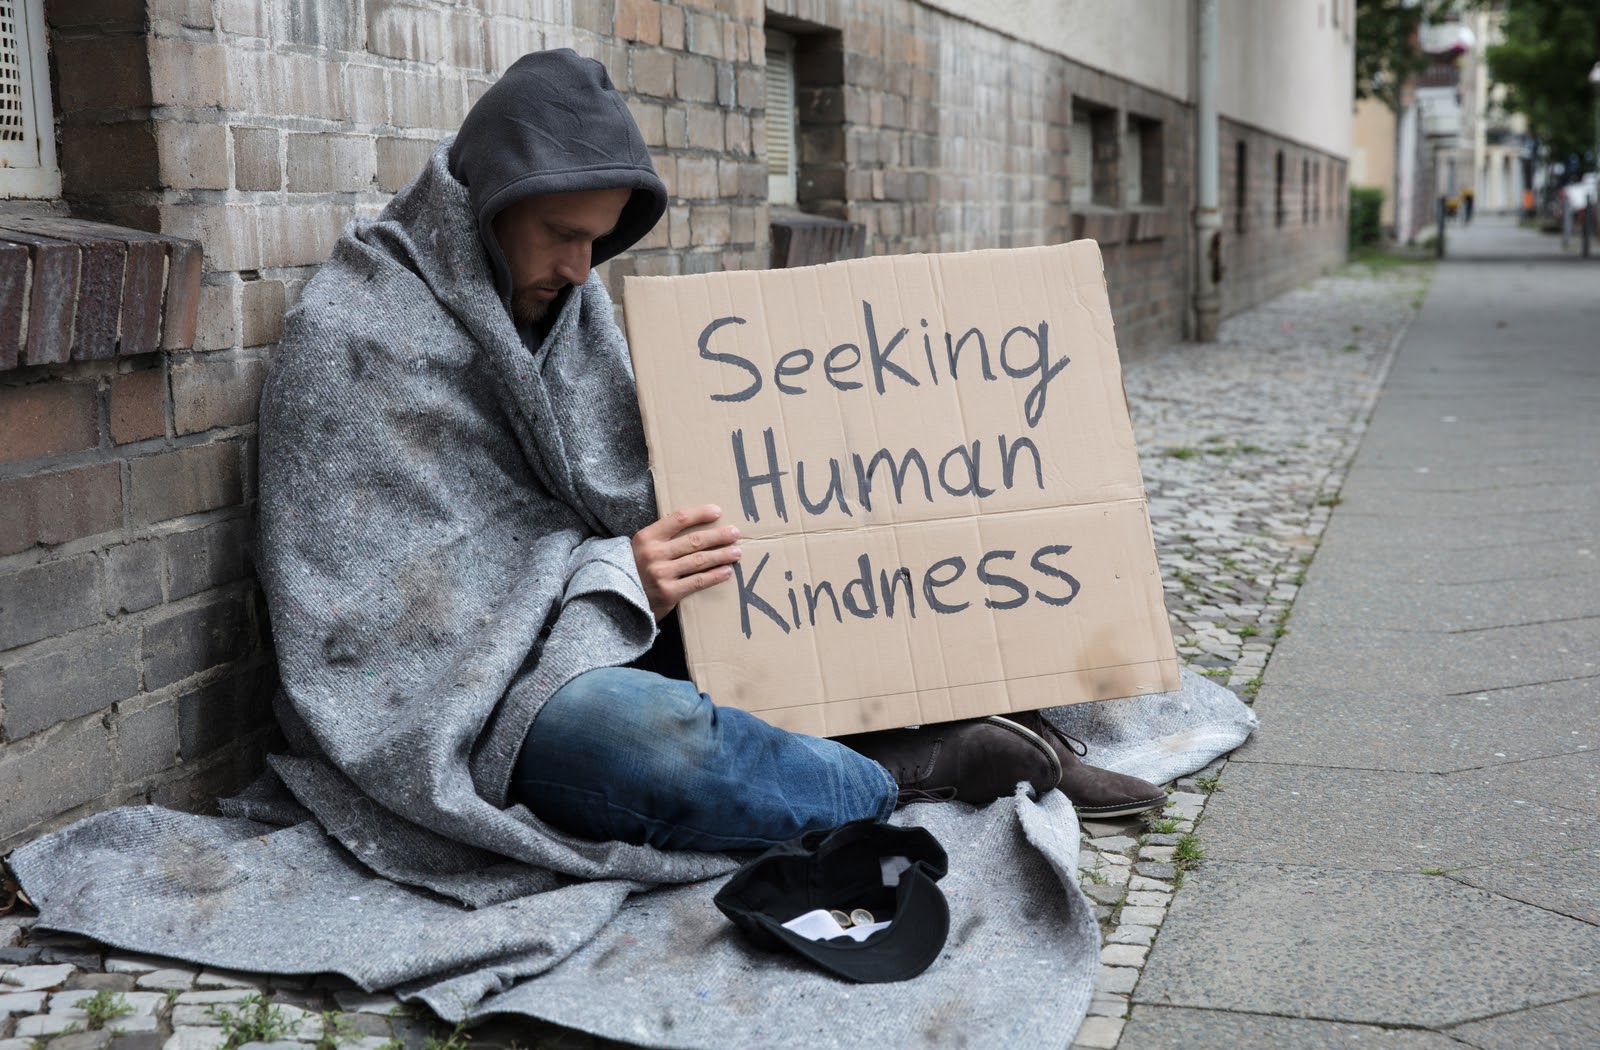 Image representing homelessness